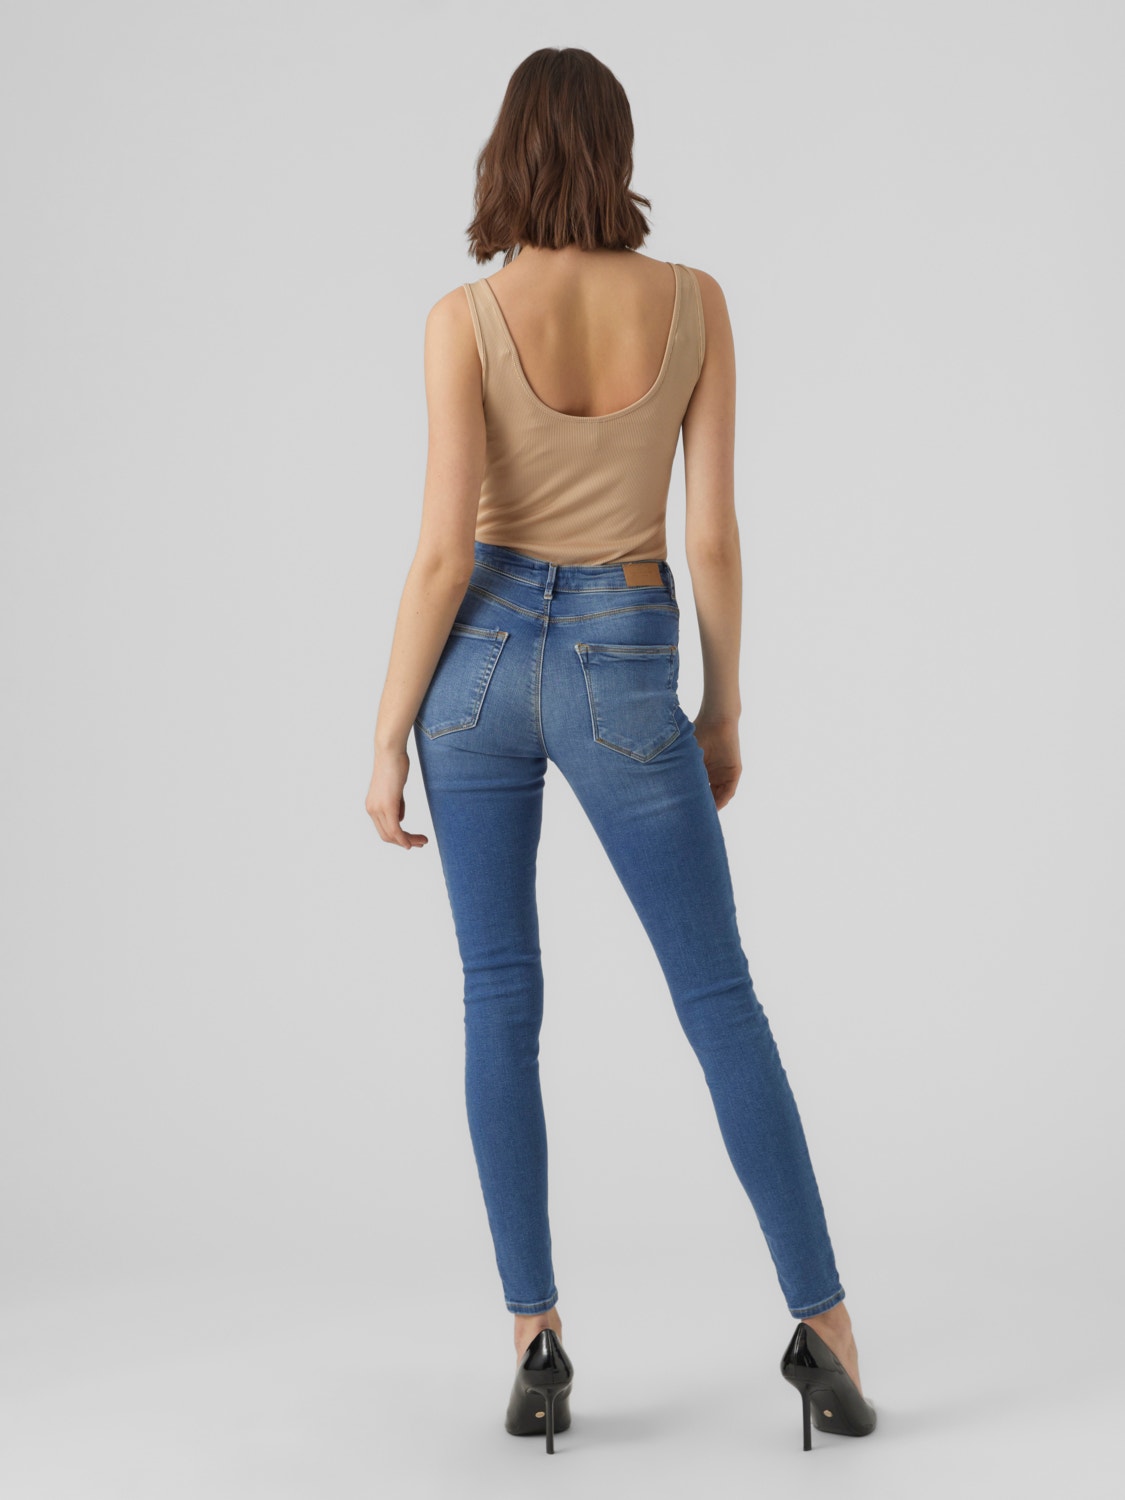 with | rise Moda® 50% VMSOPHIA discount! Jeans Vero High